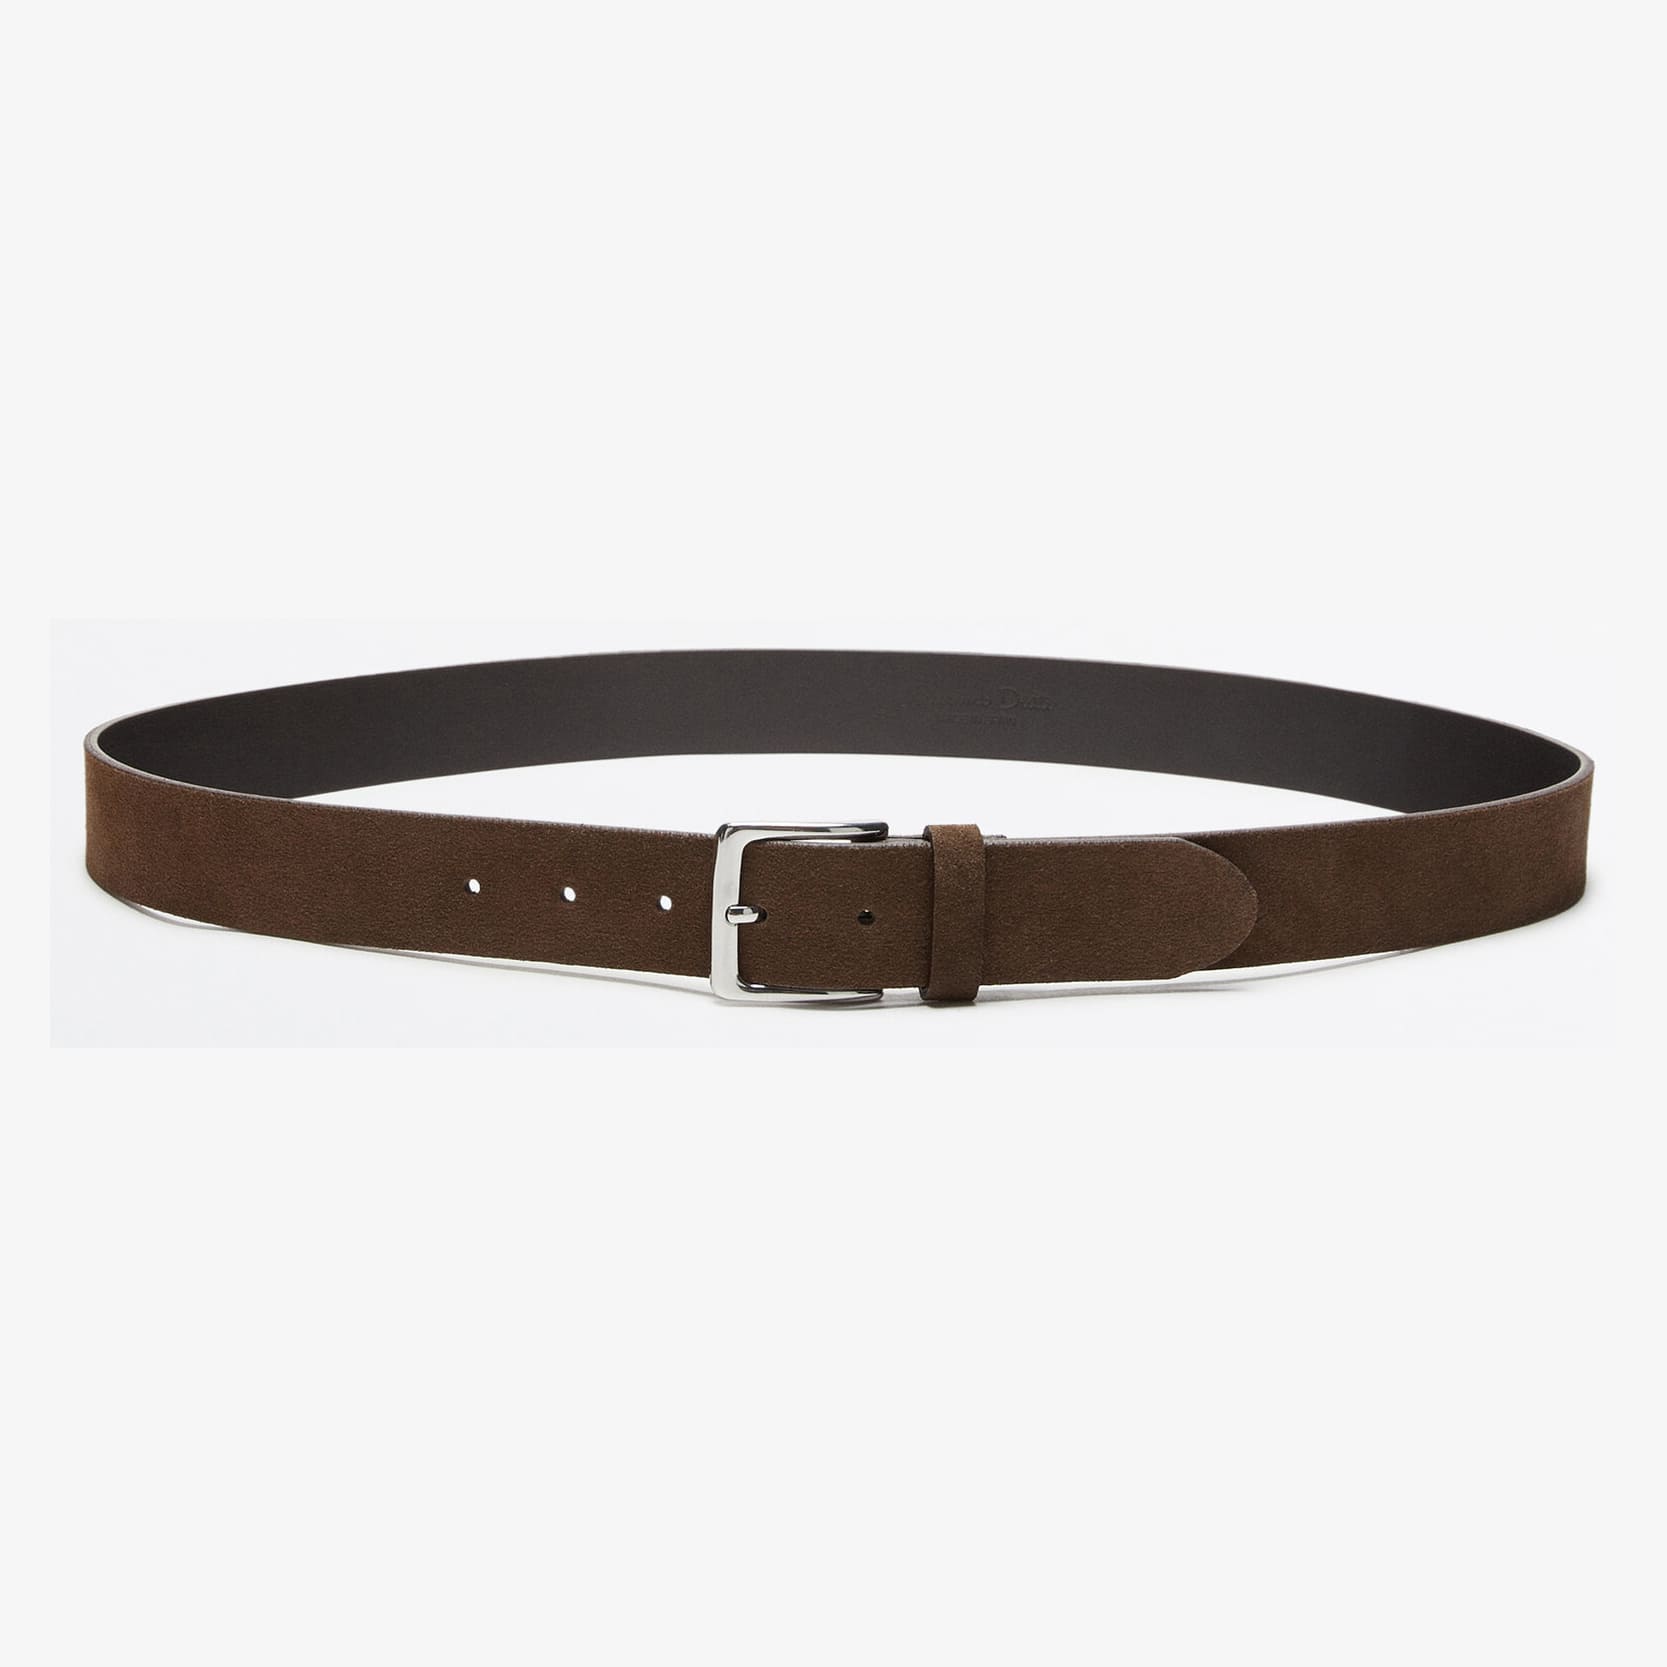 Ремень Massimo Dutti Suede Leather, коричневый ремень massimo dutti leather belt thin limited edition чёрный